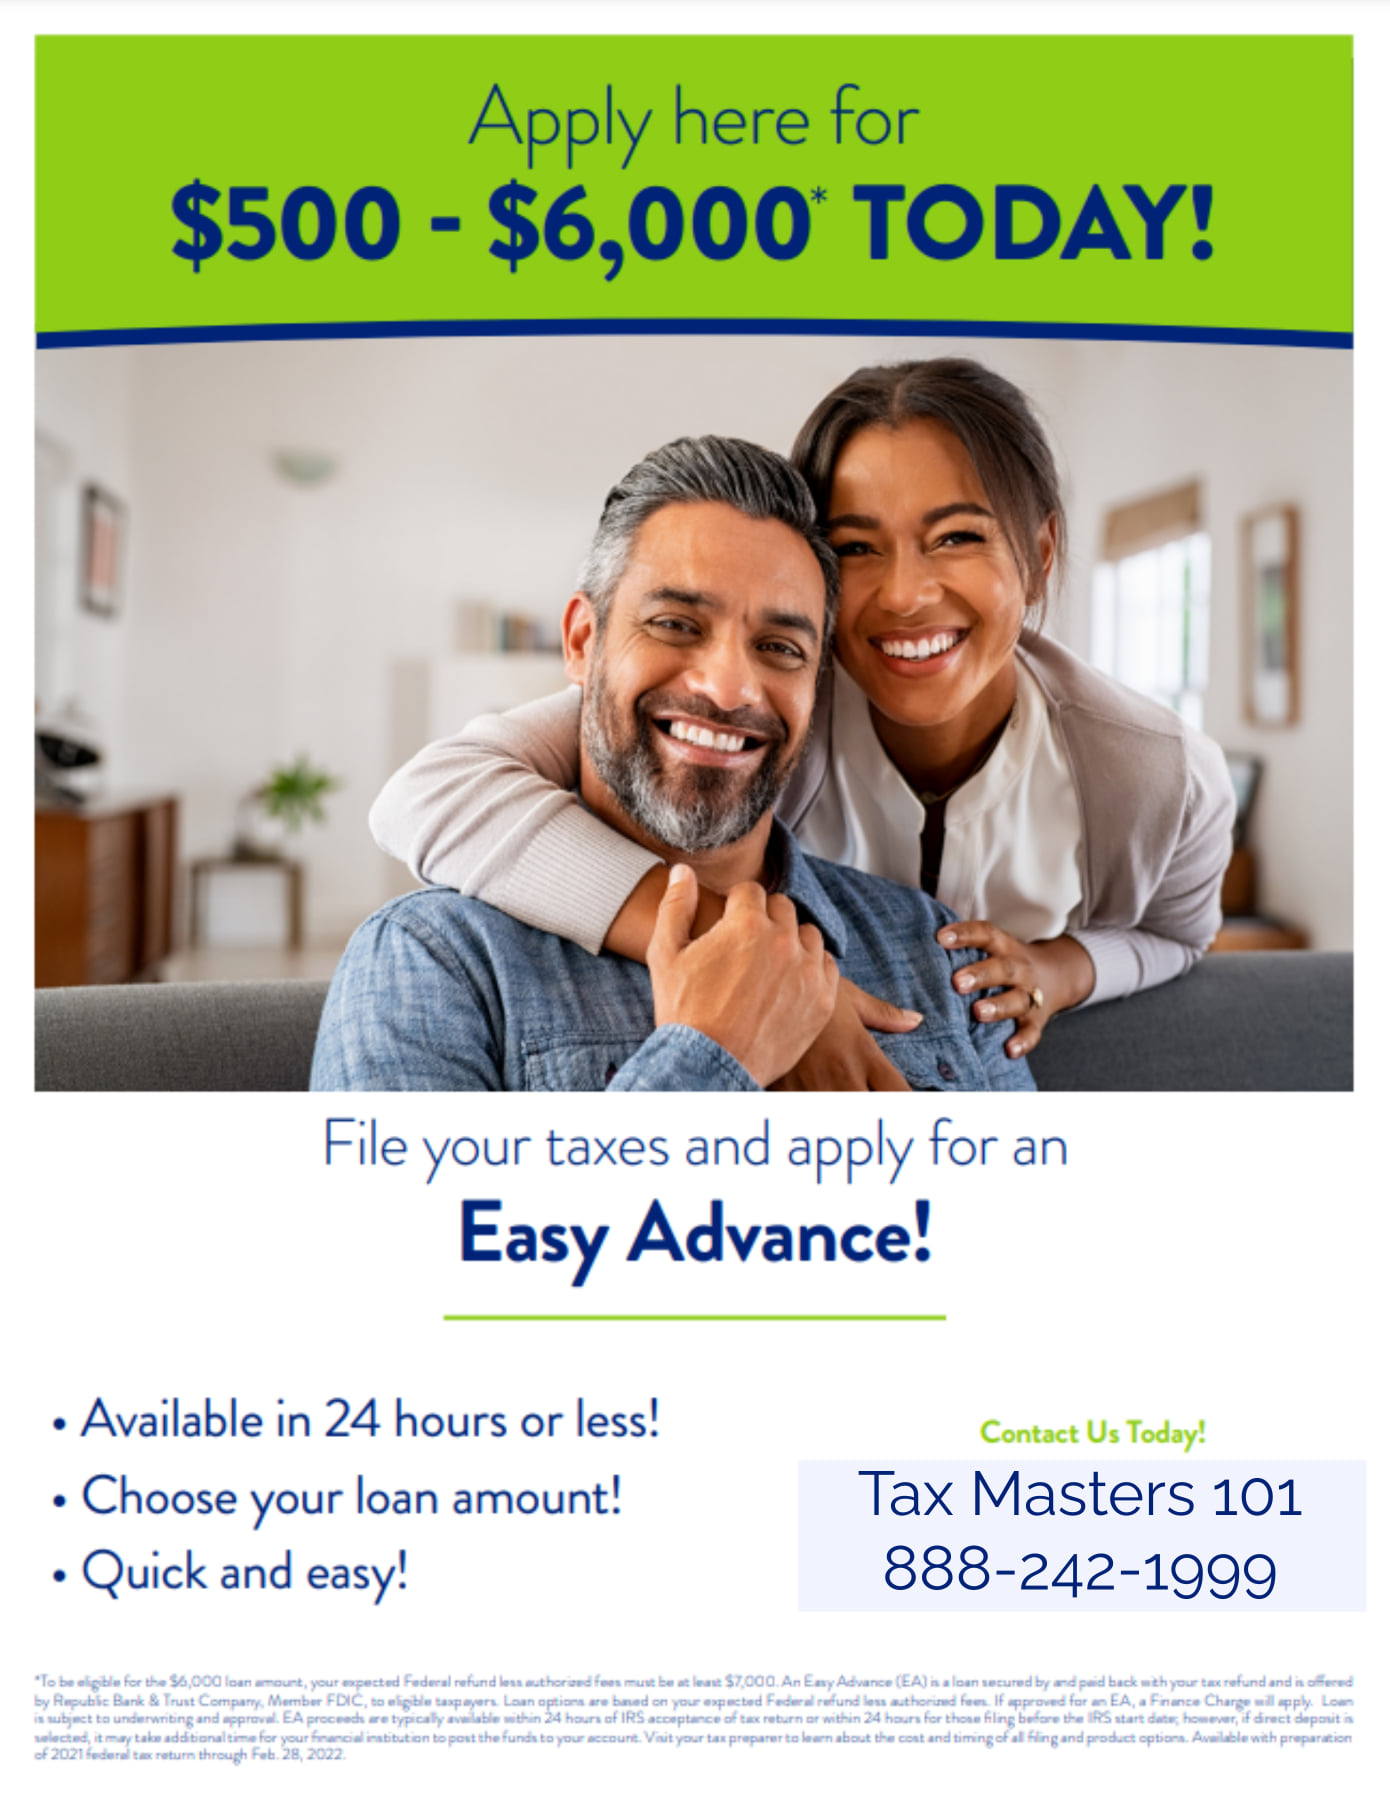 Tax Masters 101 Trenton 12463 N Main St B, Trenton Georgia 30752